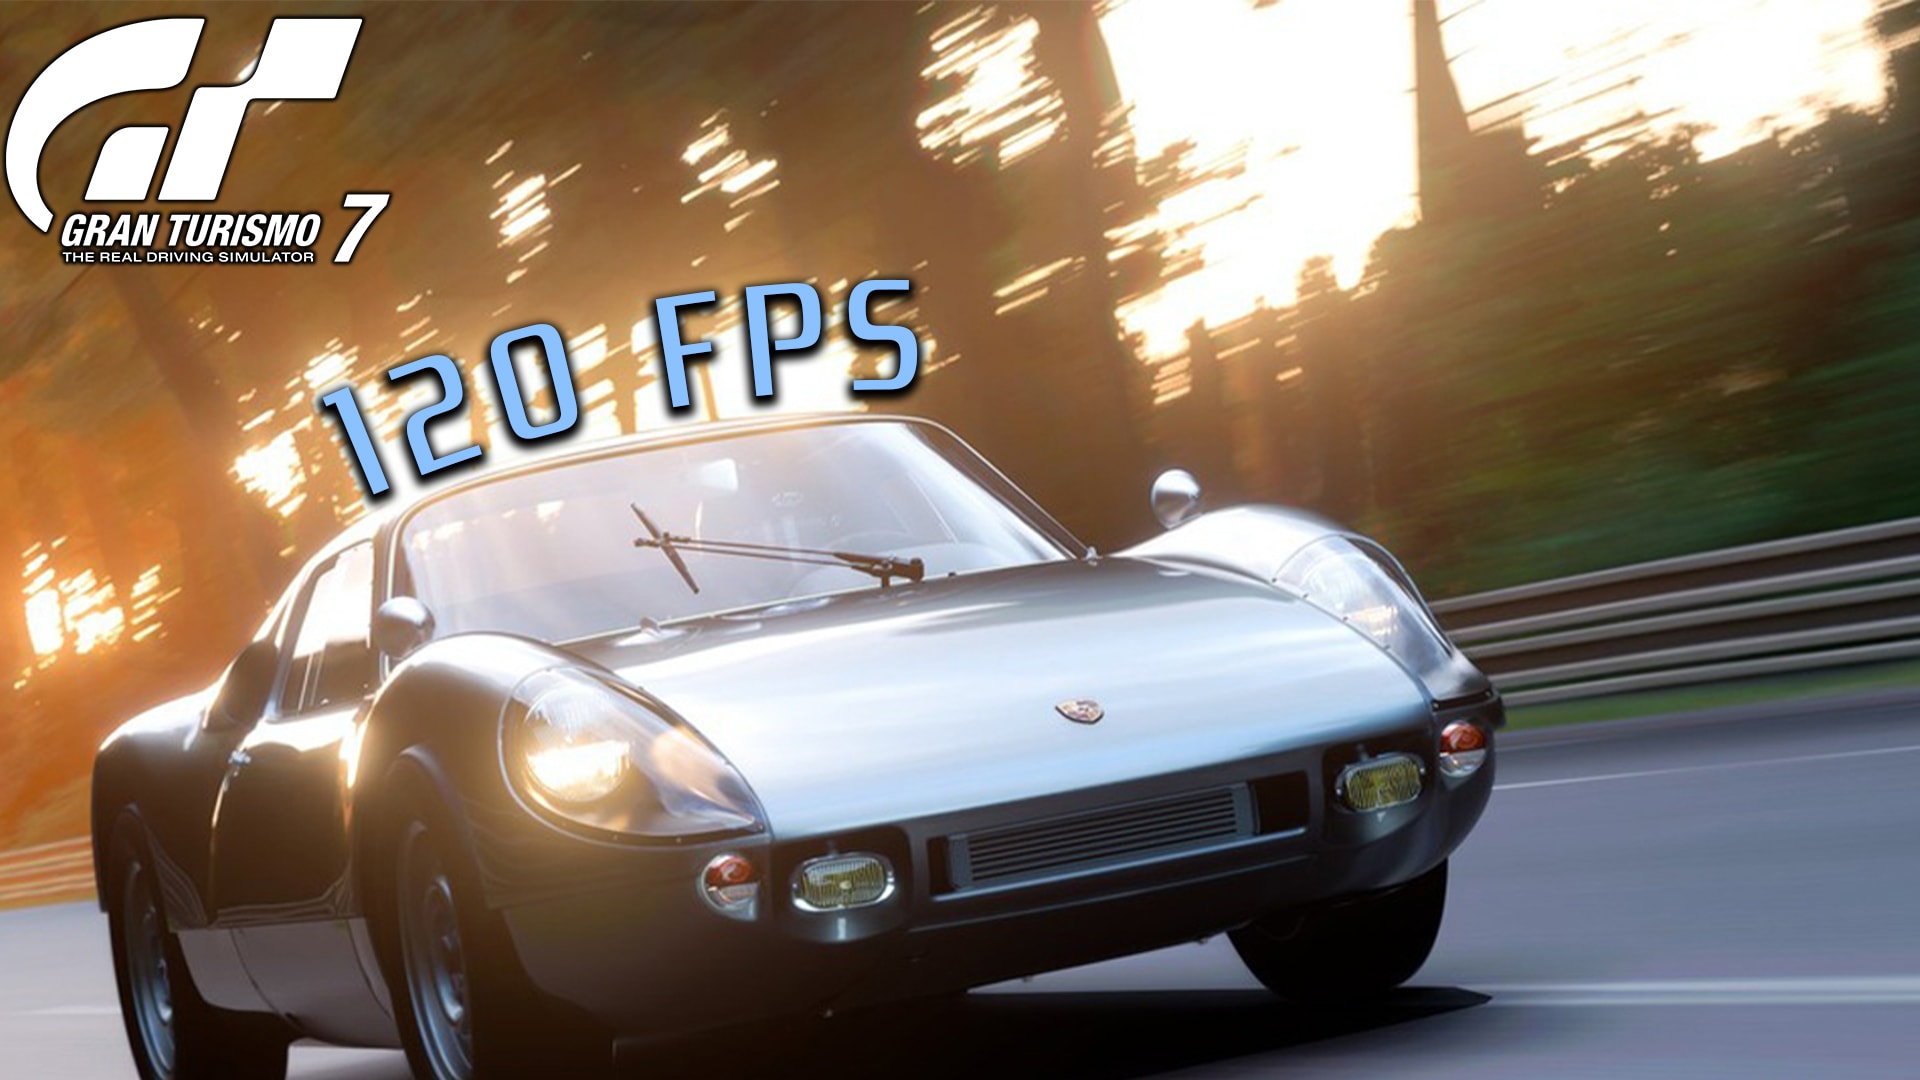 Forza Horizon 5 and Gran Turismo 7 get new cars, photo mode updates